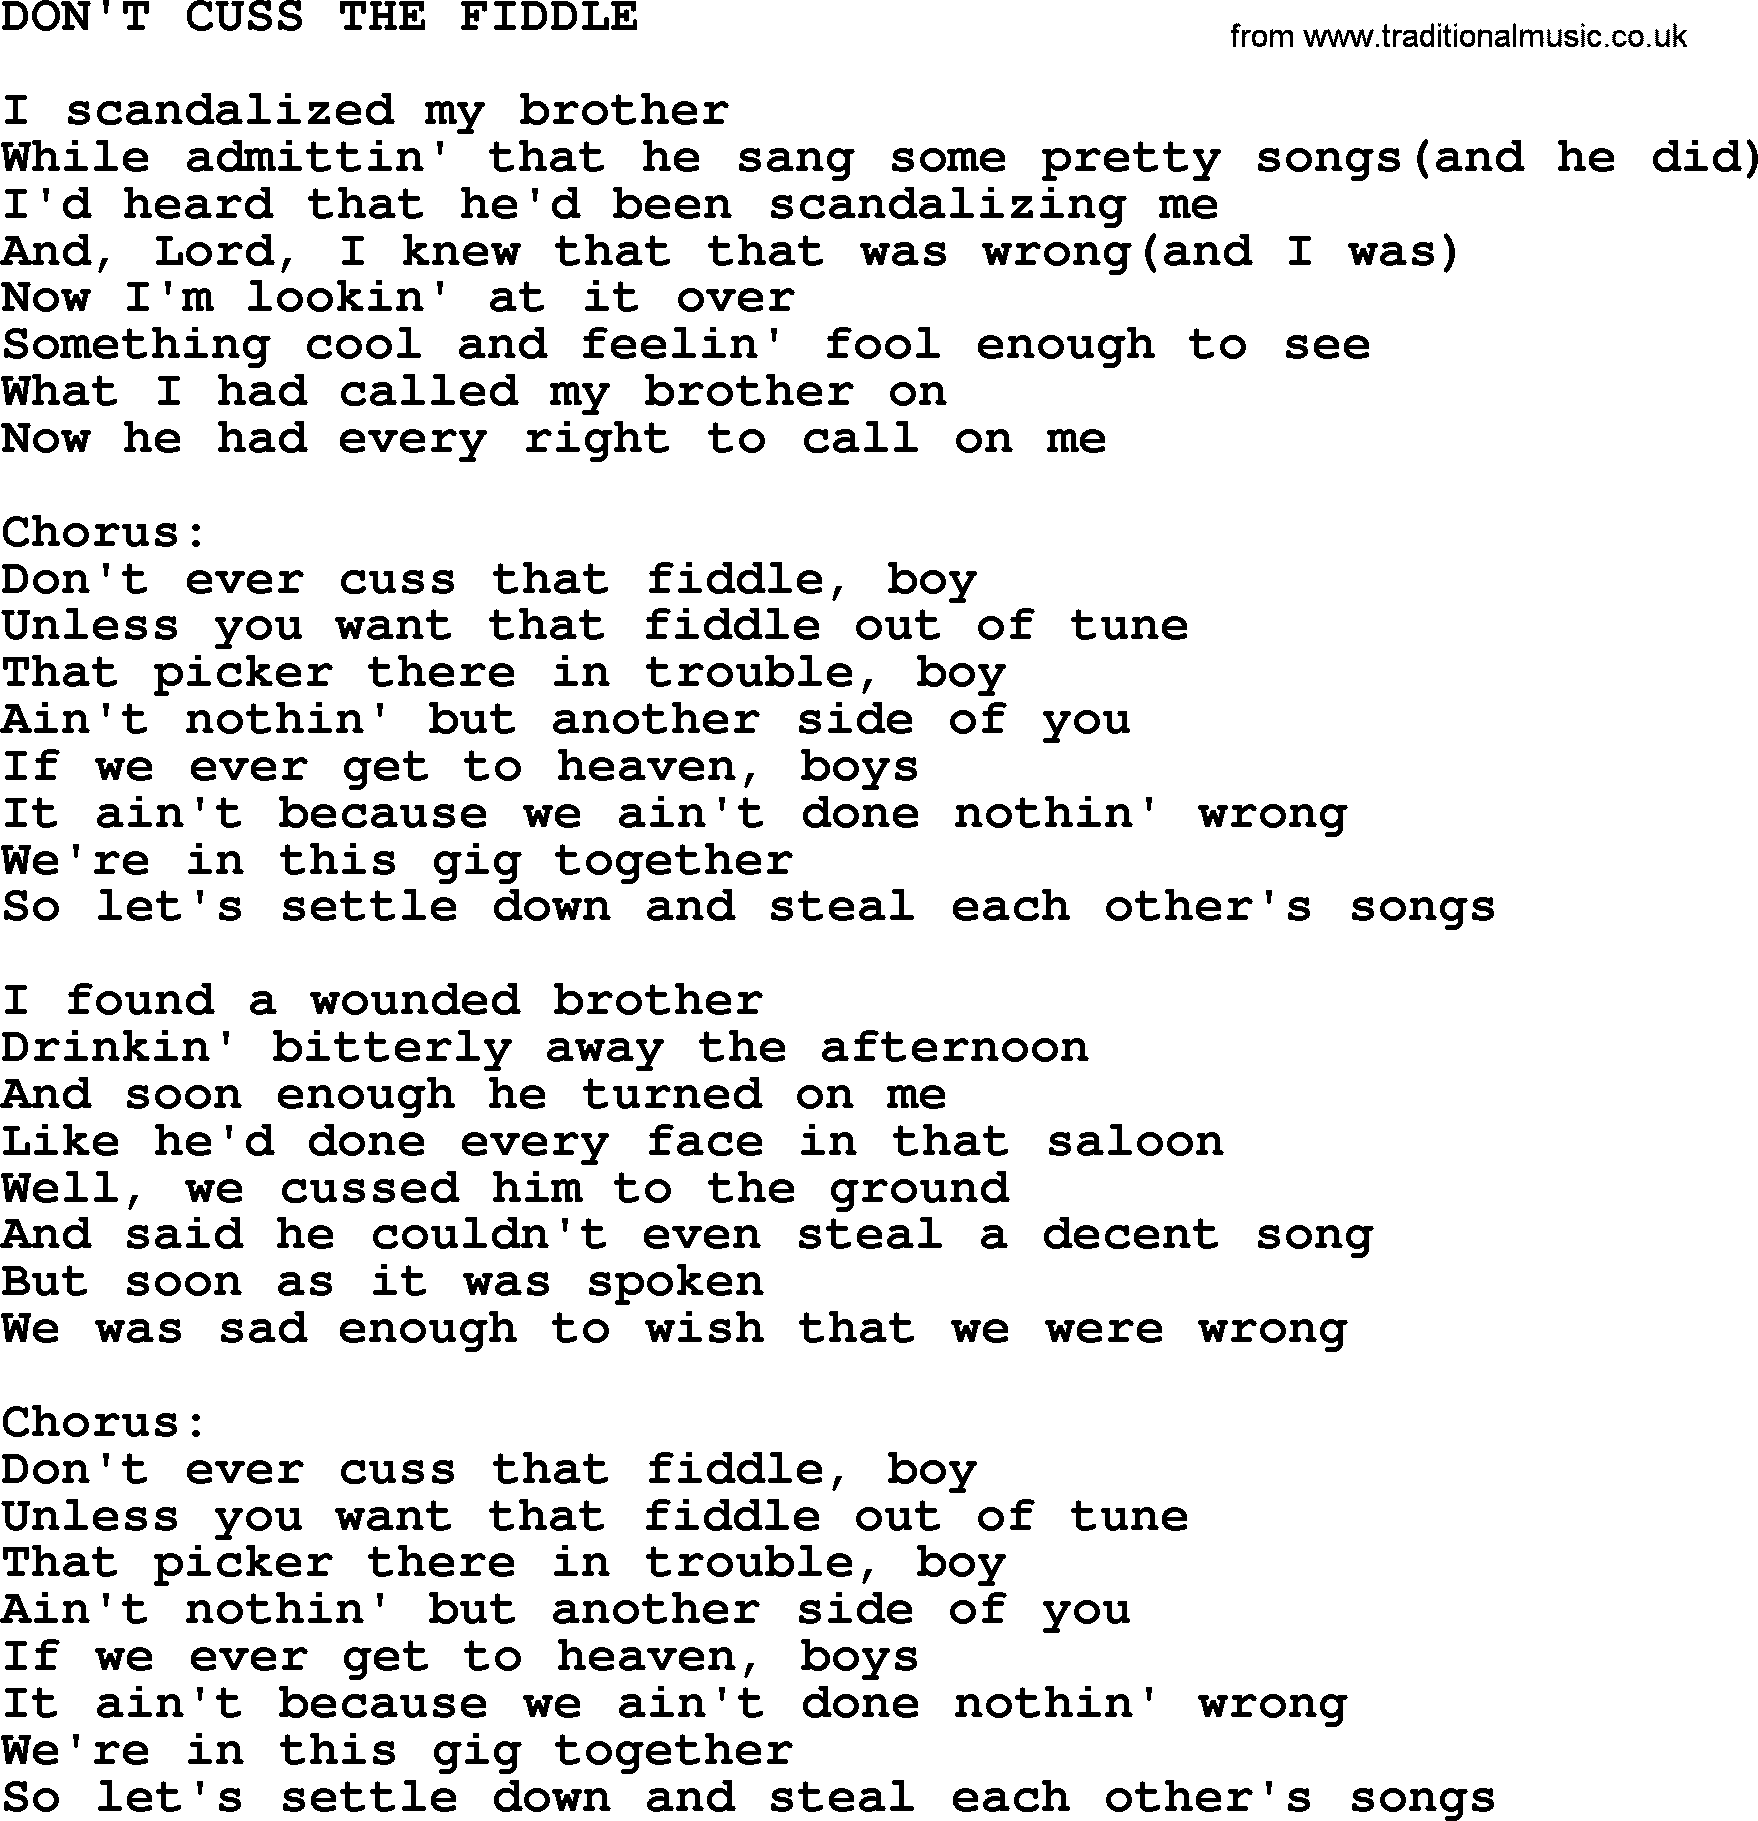 Kris Kristofferson song: Don't Cuss The Fiddle lyrics